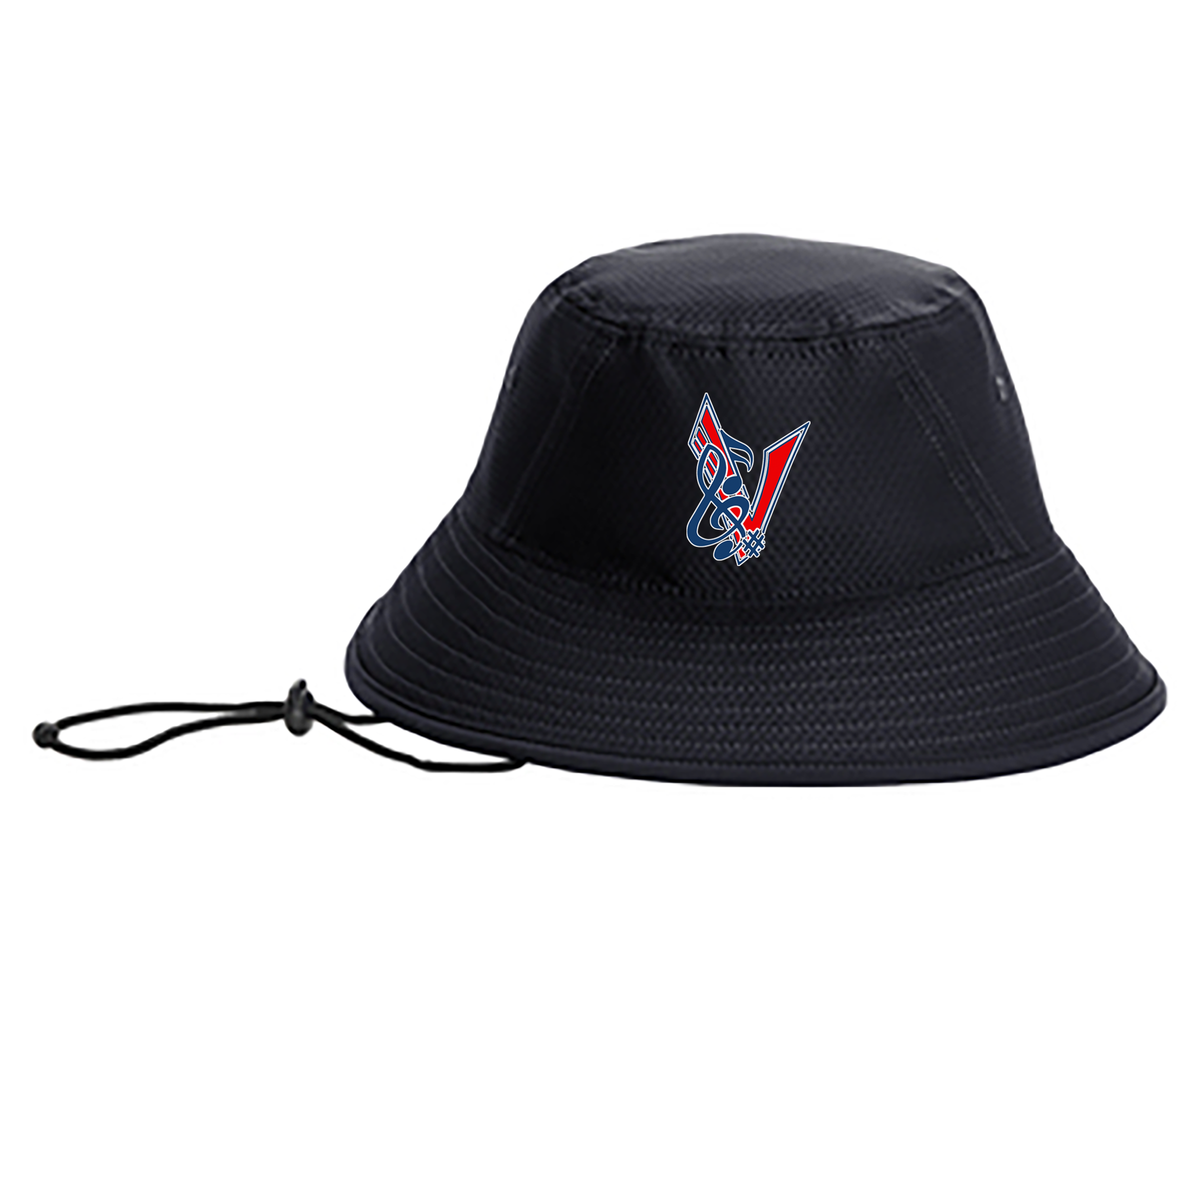 *NEW* Fort Walton Beach Vikings Band Hex Era Bucket Hat